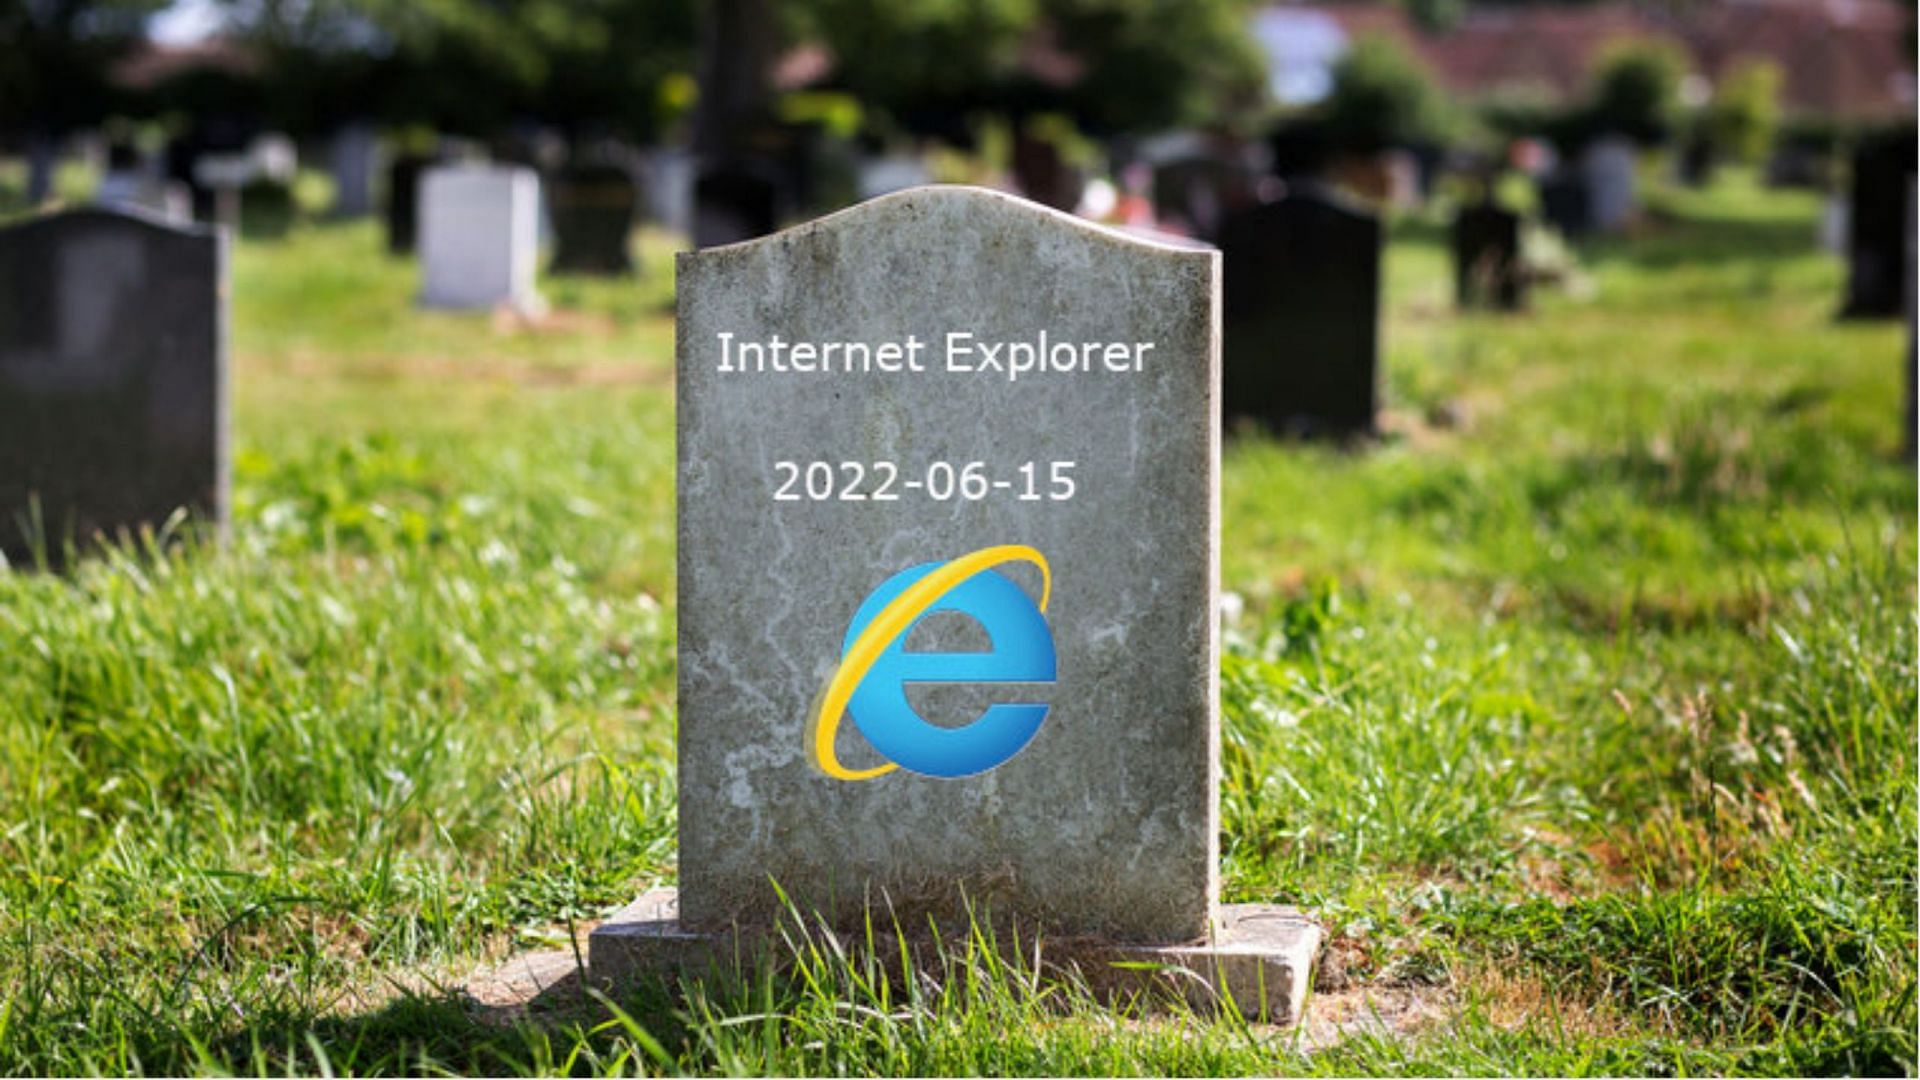 Microsoft shut down Internet Explorer after 27 years of service (Image via @EddyVinckk/Twitter)